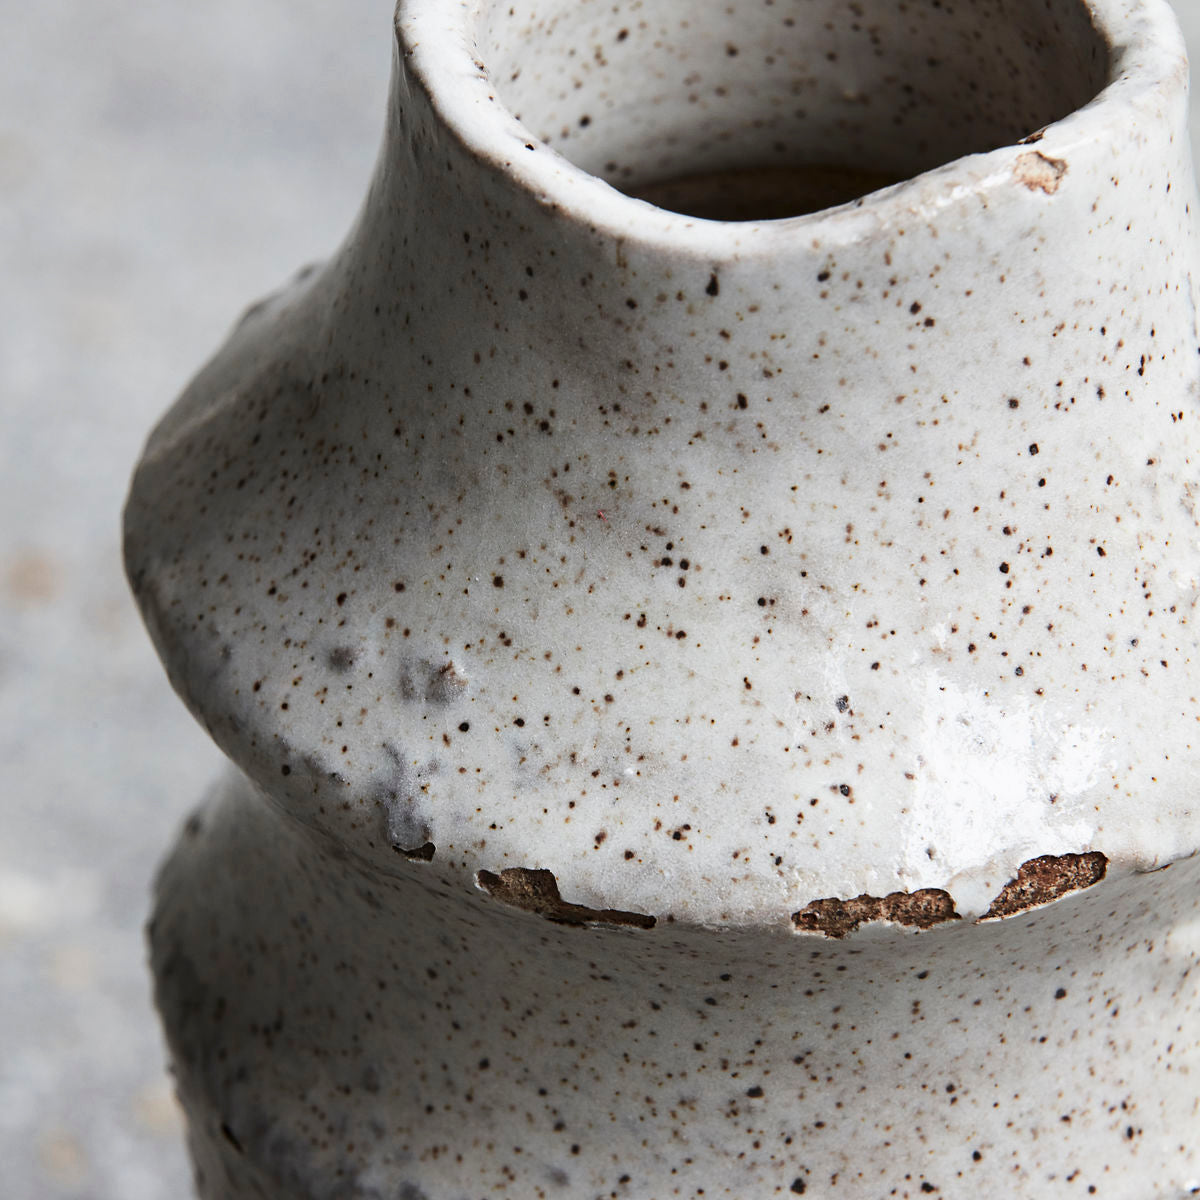 Vase, Nature - KAQTU Design